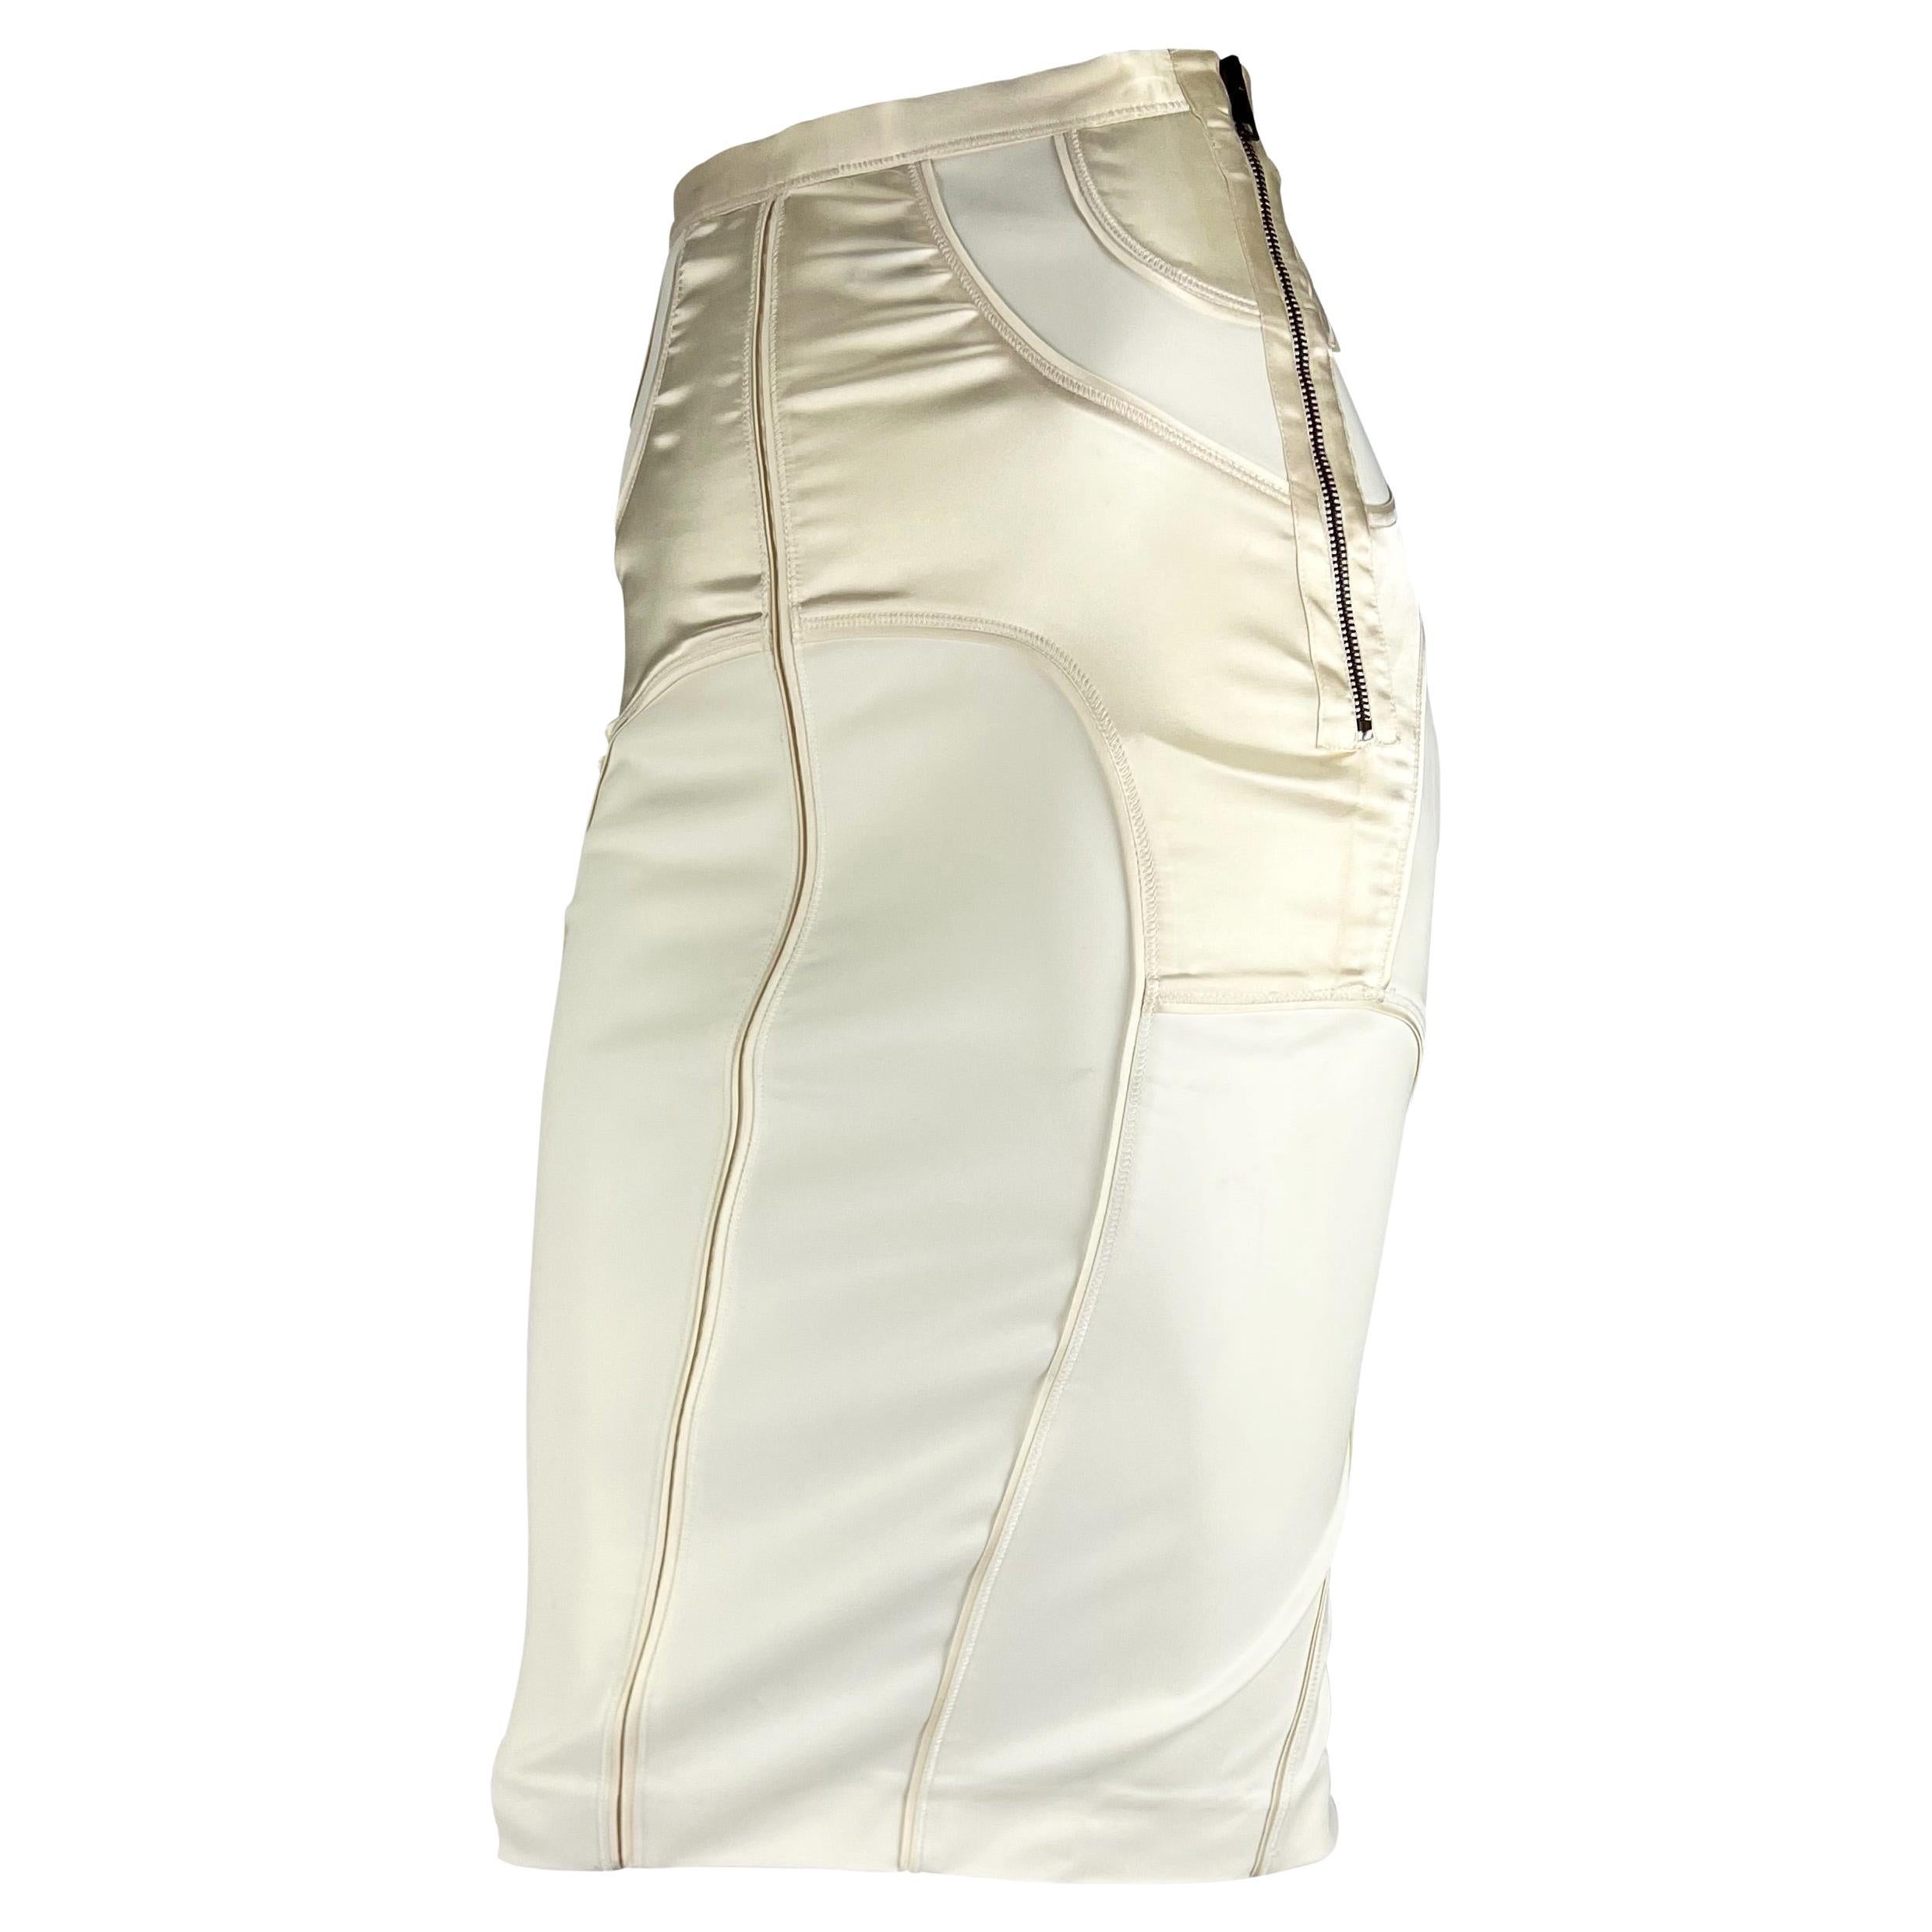 F/W 2003 Gucci by Tom Ford White Satin Panel Zip Stretch Skirt (Jupe stretch zippée à empiècements en satin blanc)